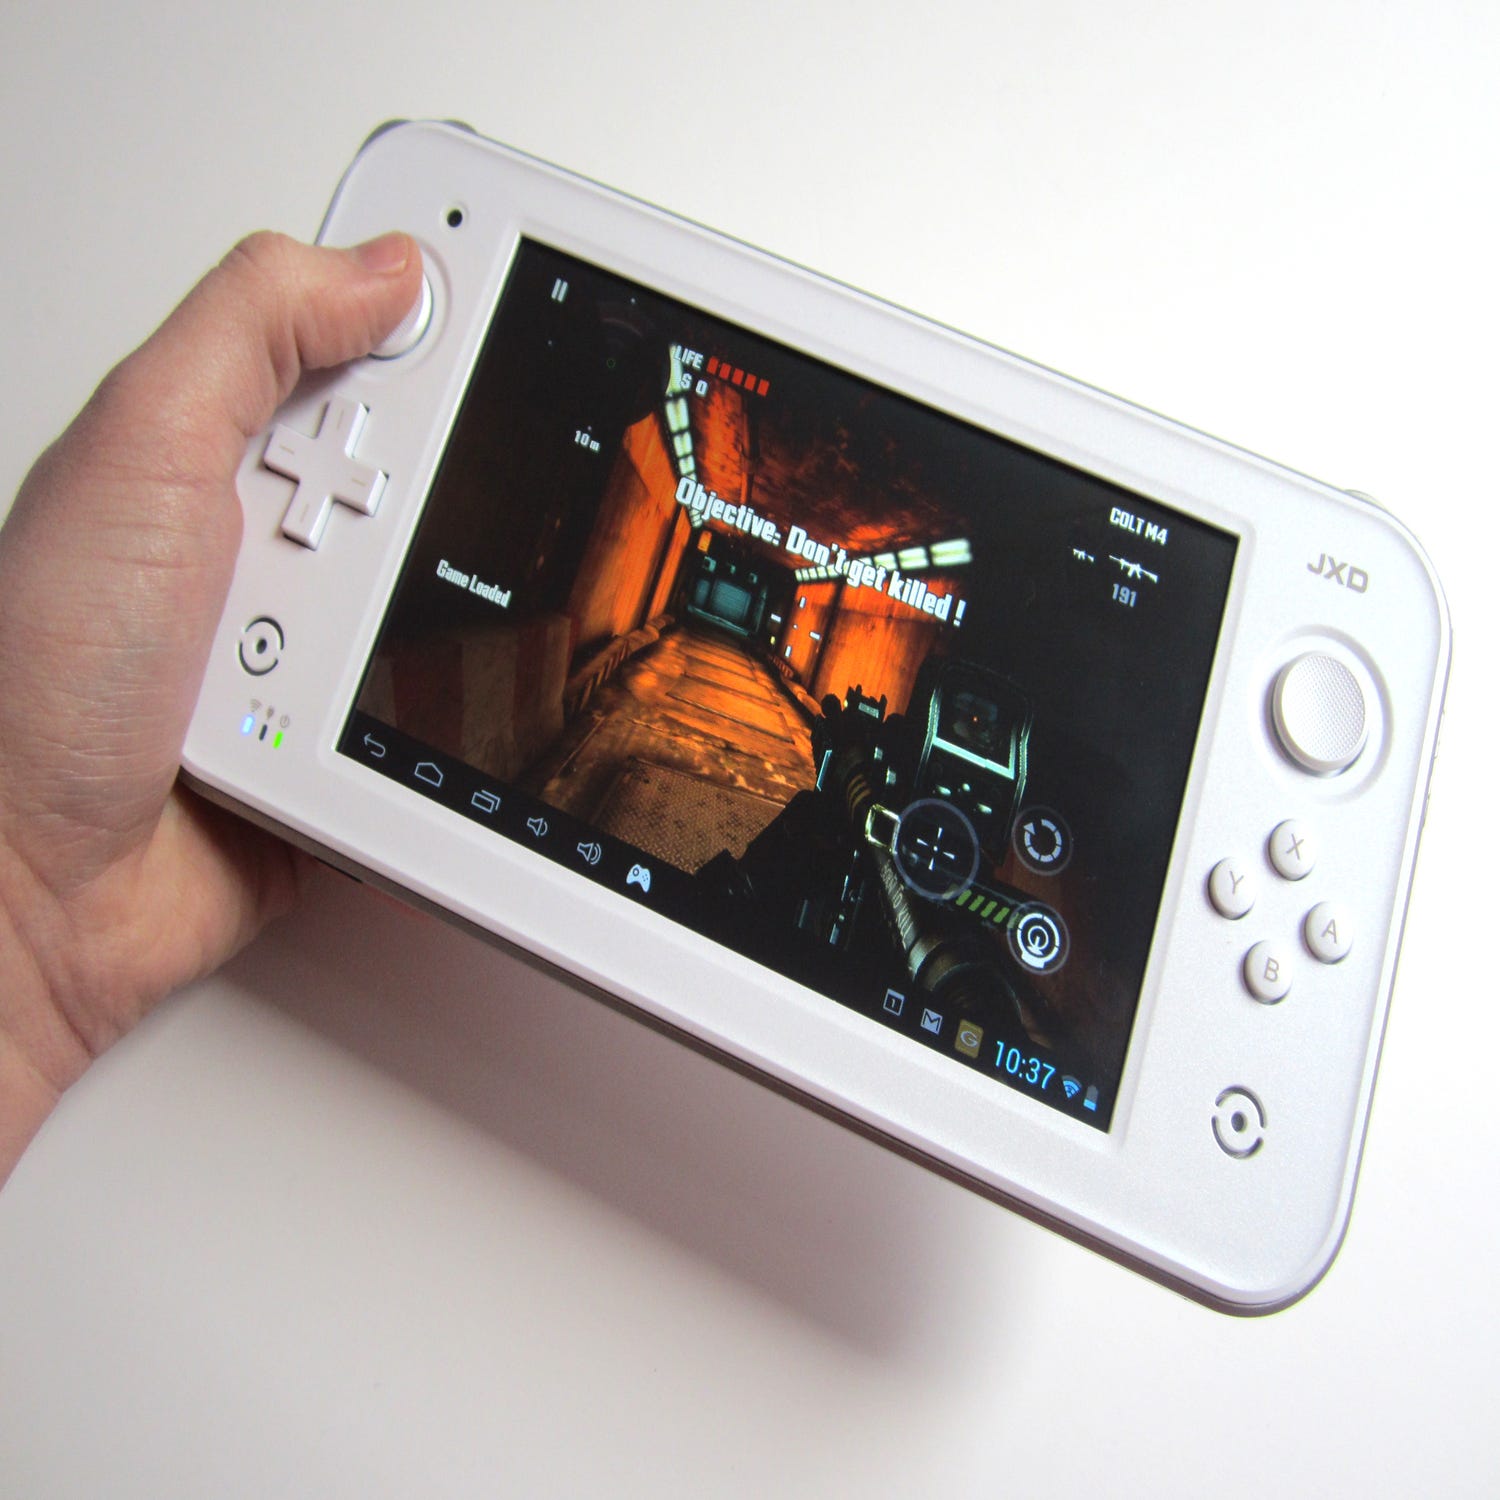 A Wii U Emulator Has Been Released For Windows 10 - My Nintendo News